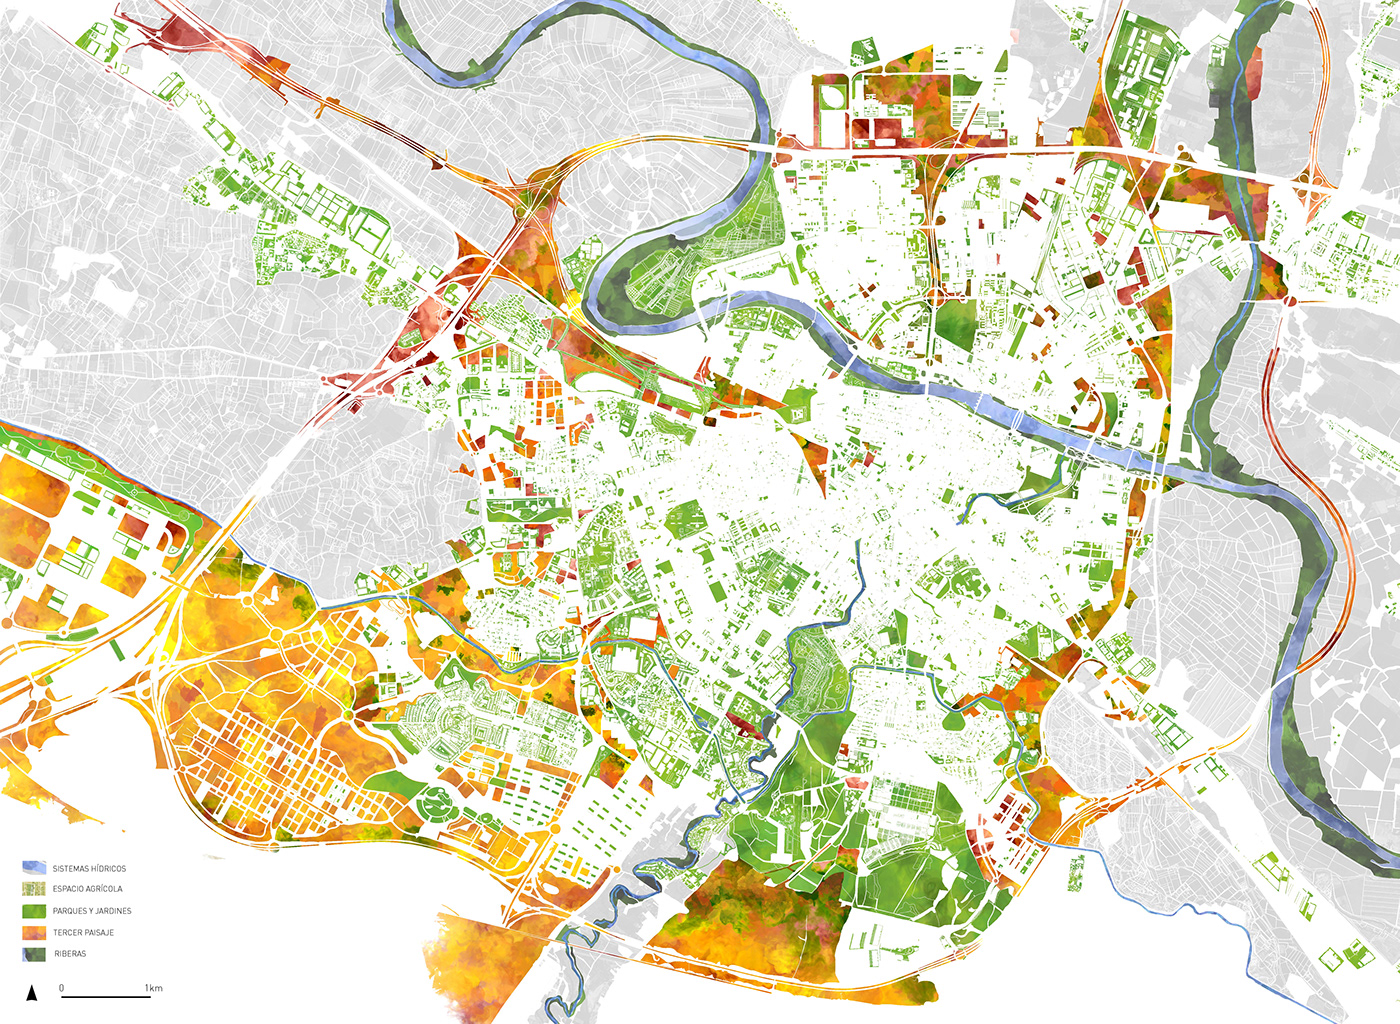 Tercer Paisaje Biodiversidad zaragoza Mapping cartografia gilles clement manifiesto paisaje urbanismo tfg